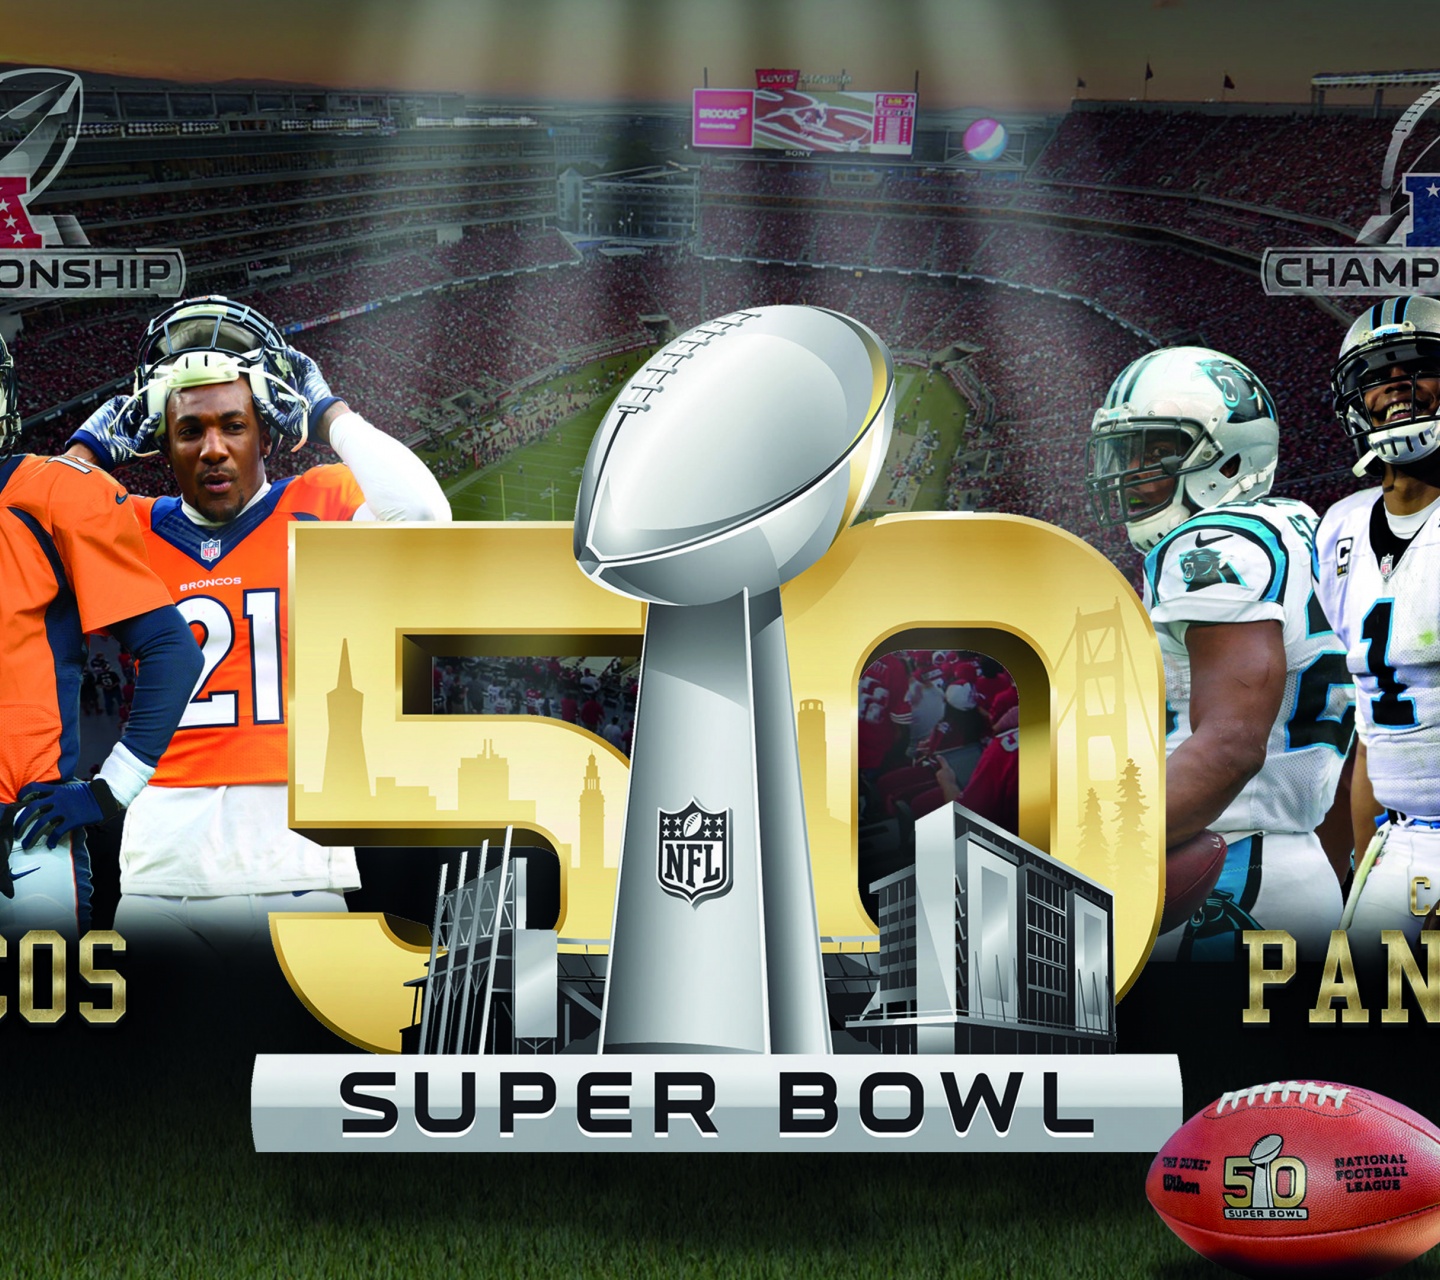 Broncos Vs Panthers Super Bowl 50